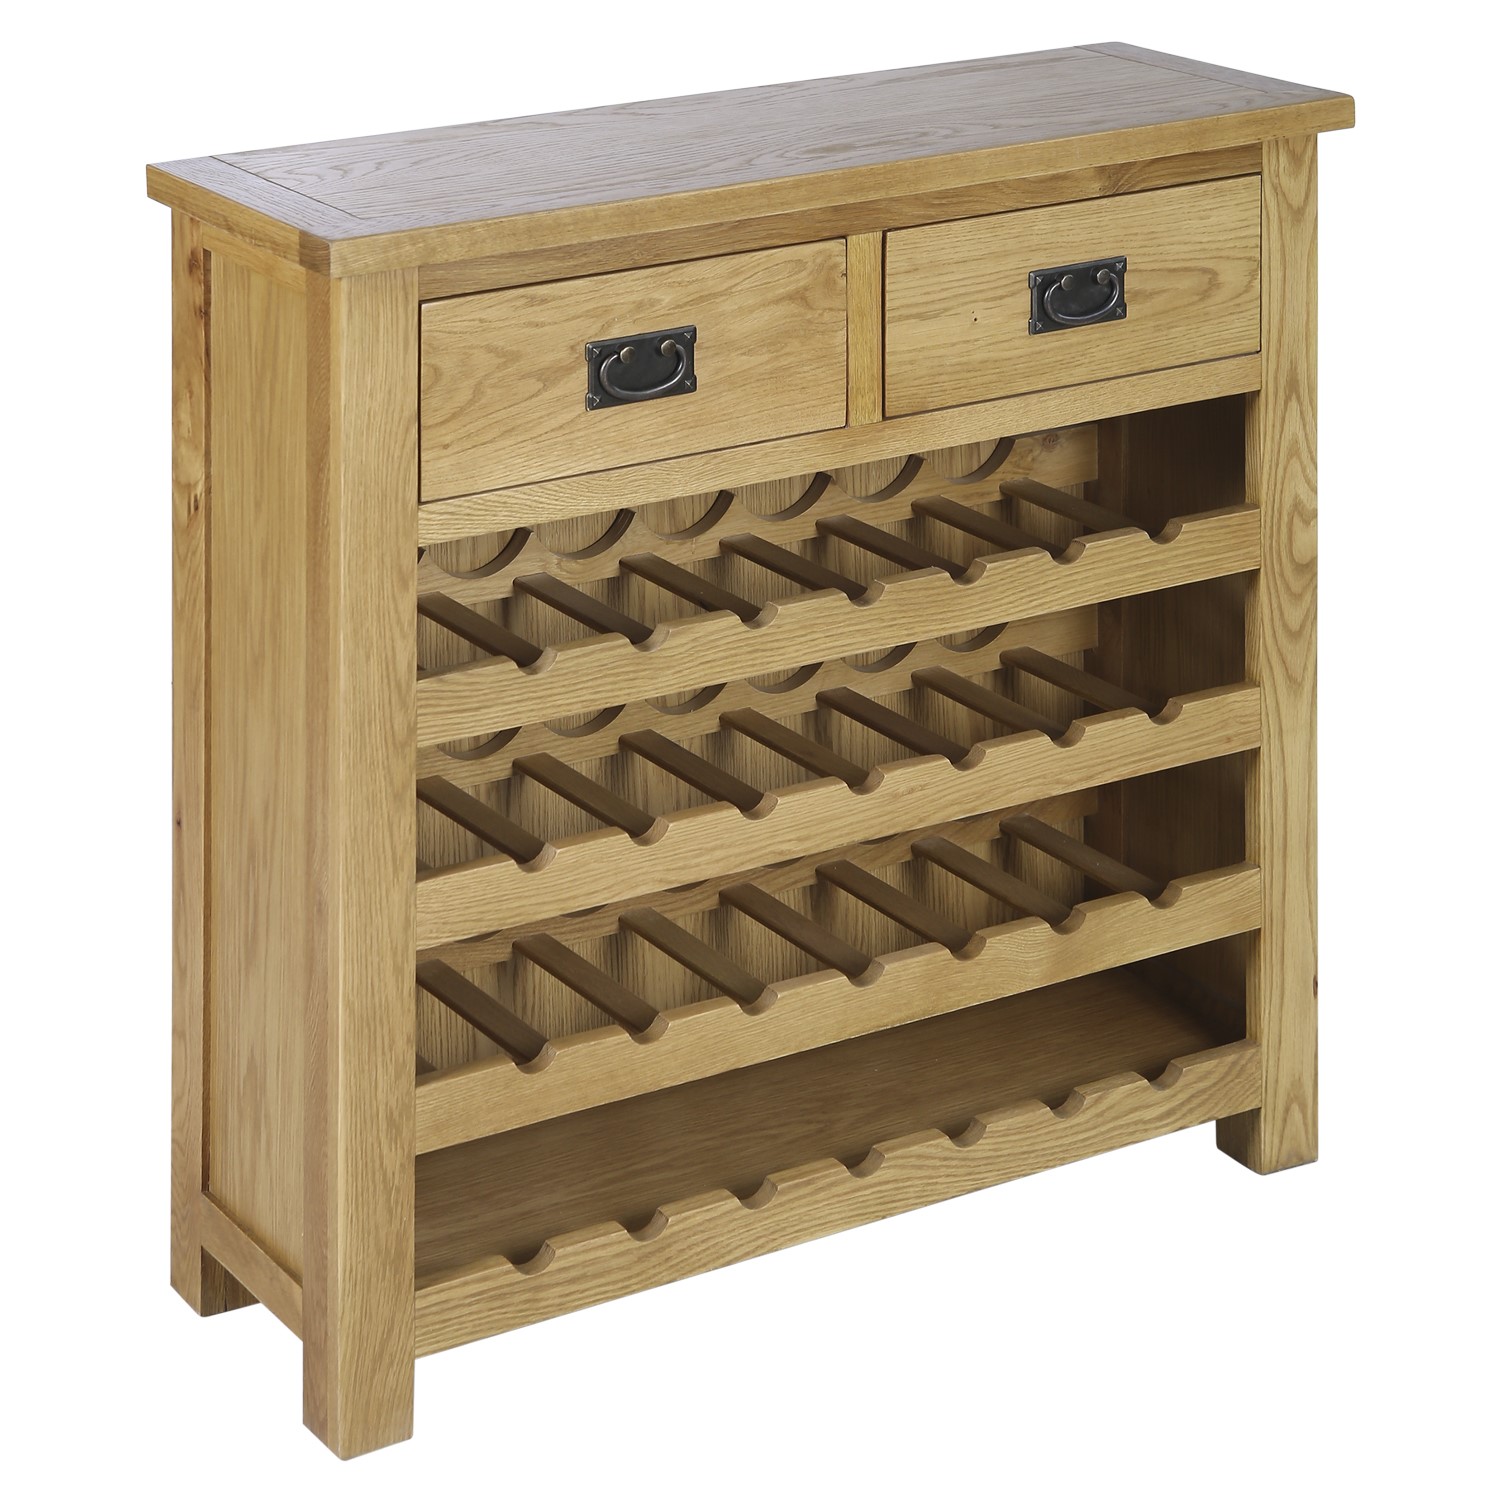 Solid Oak Wine Rack Sideboard With Drawers Rustic Saxon